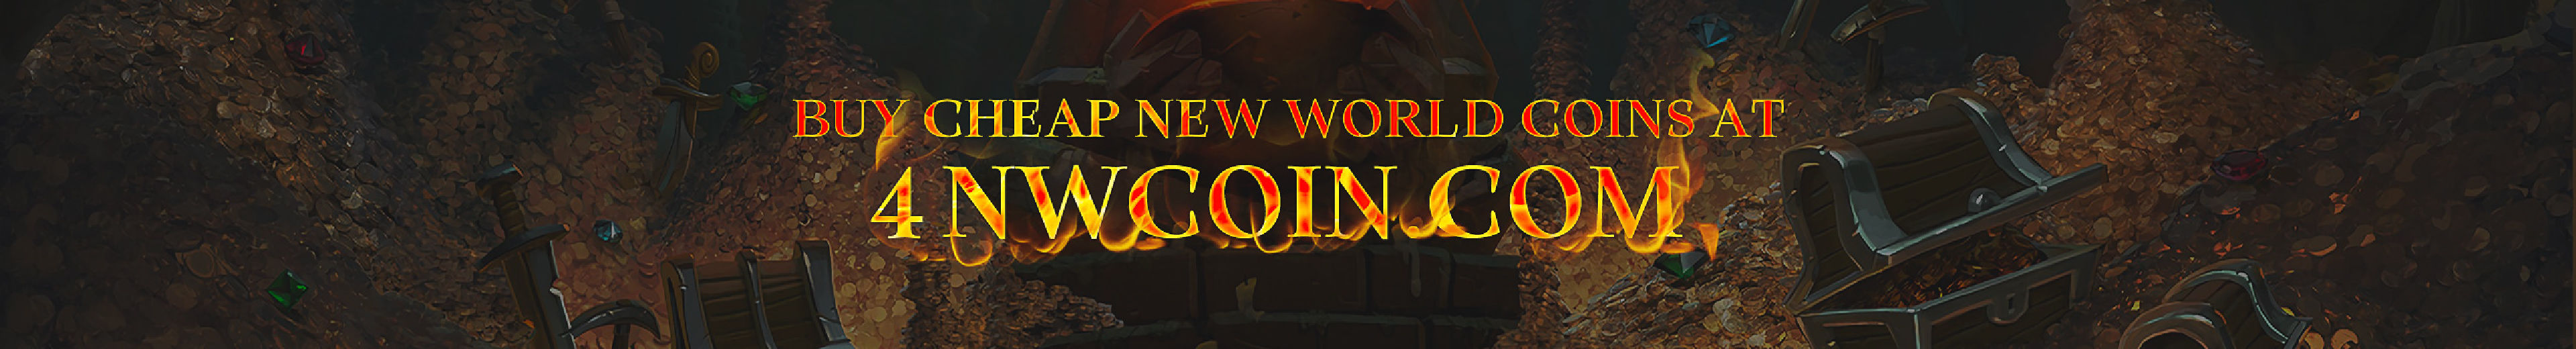 BUY CHEAP NEW WORLD COINS AT